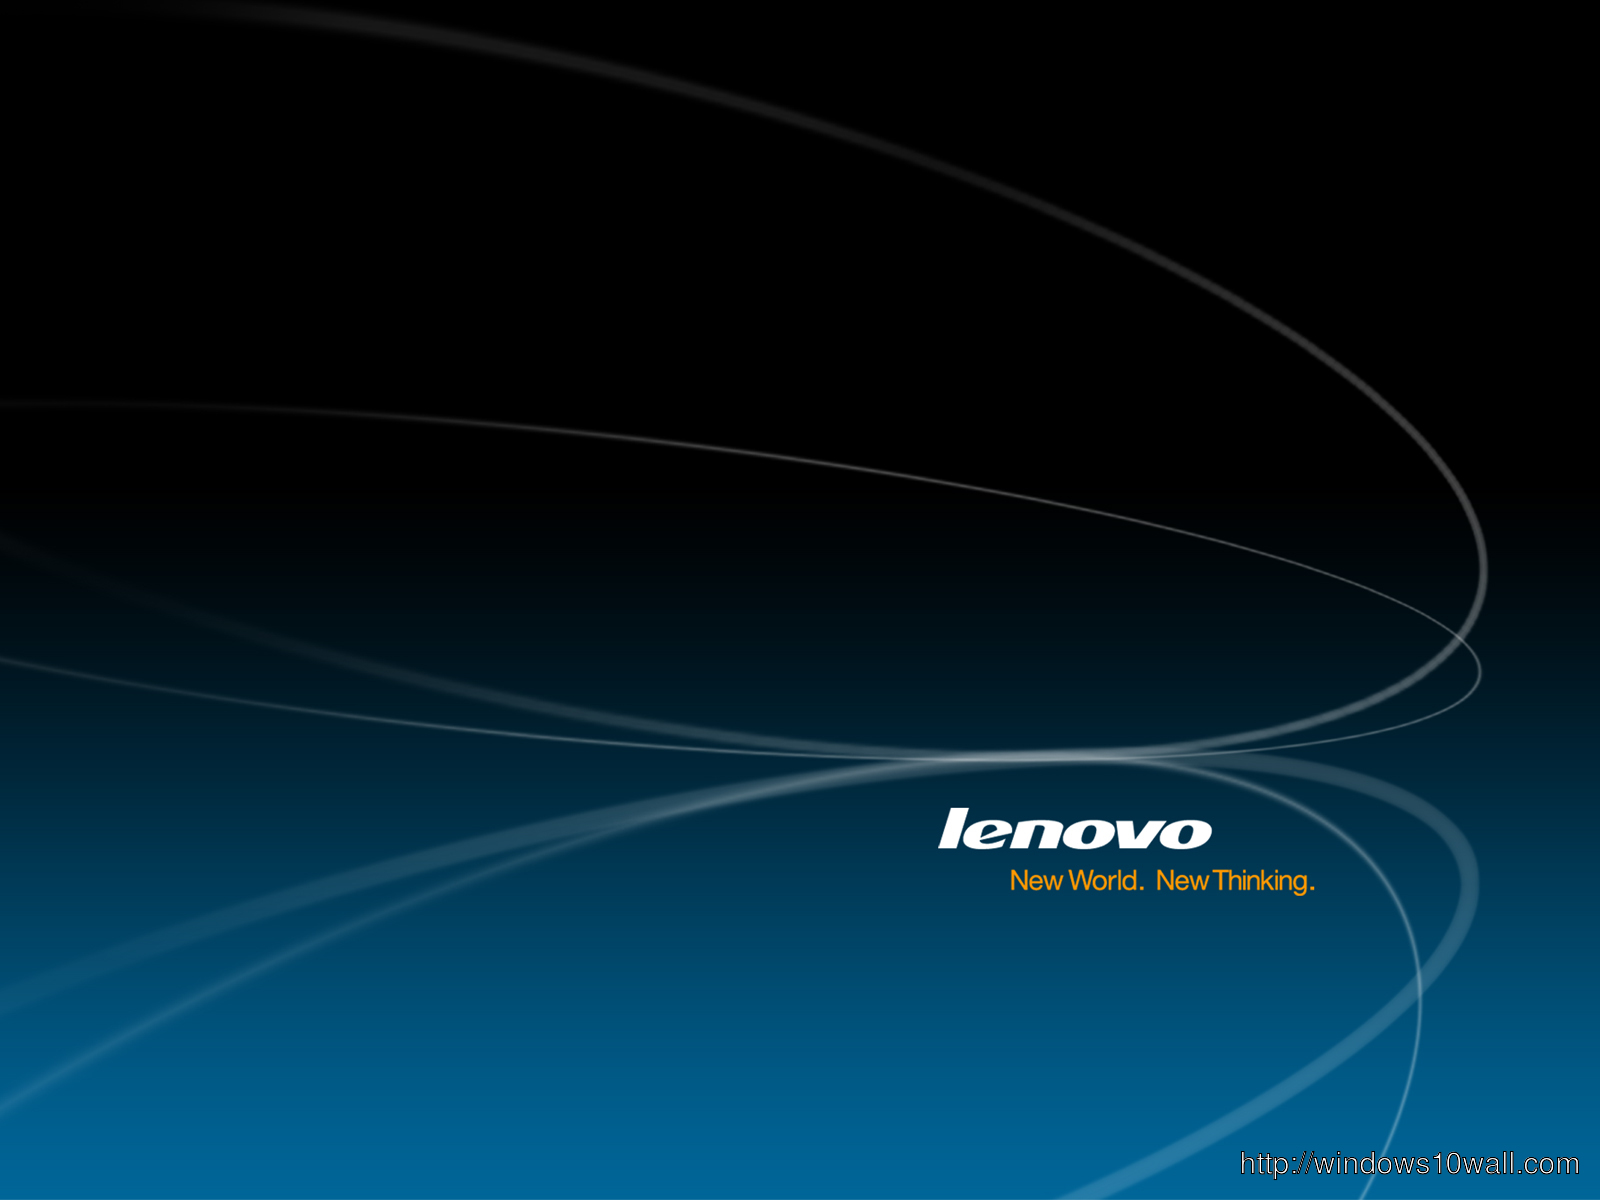 New World Thinking For Fans Lenovo Background Wallpaper